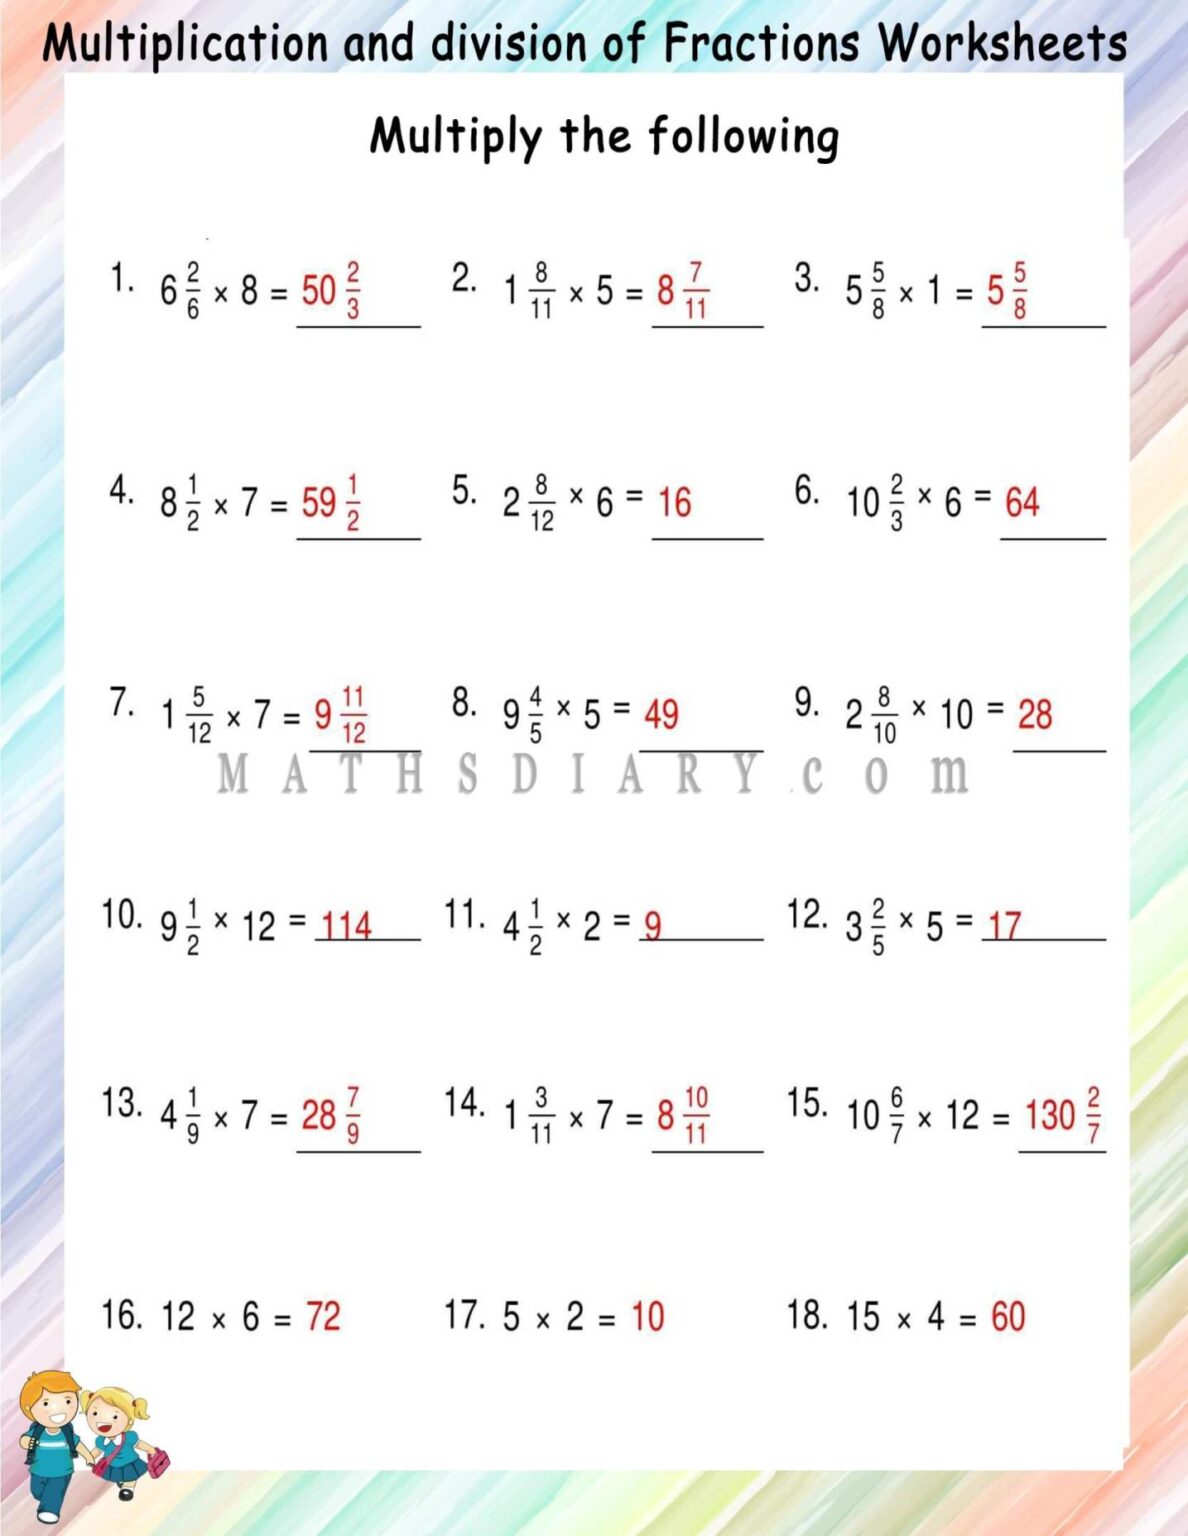 mixed-multiplication-of-fractions-worksheets-math-worksheets-mathsdiary